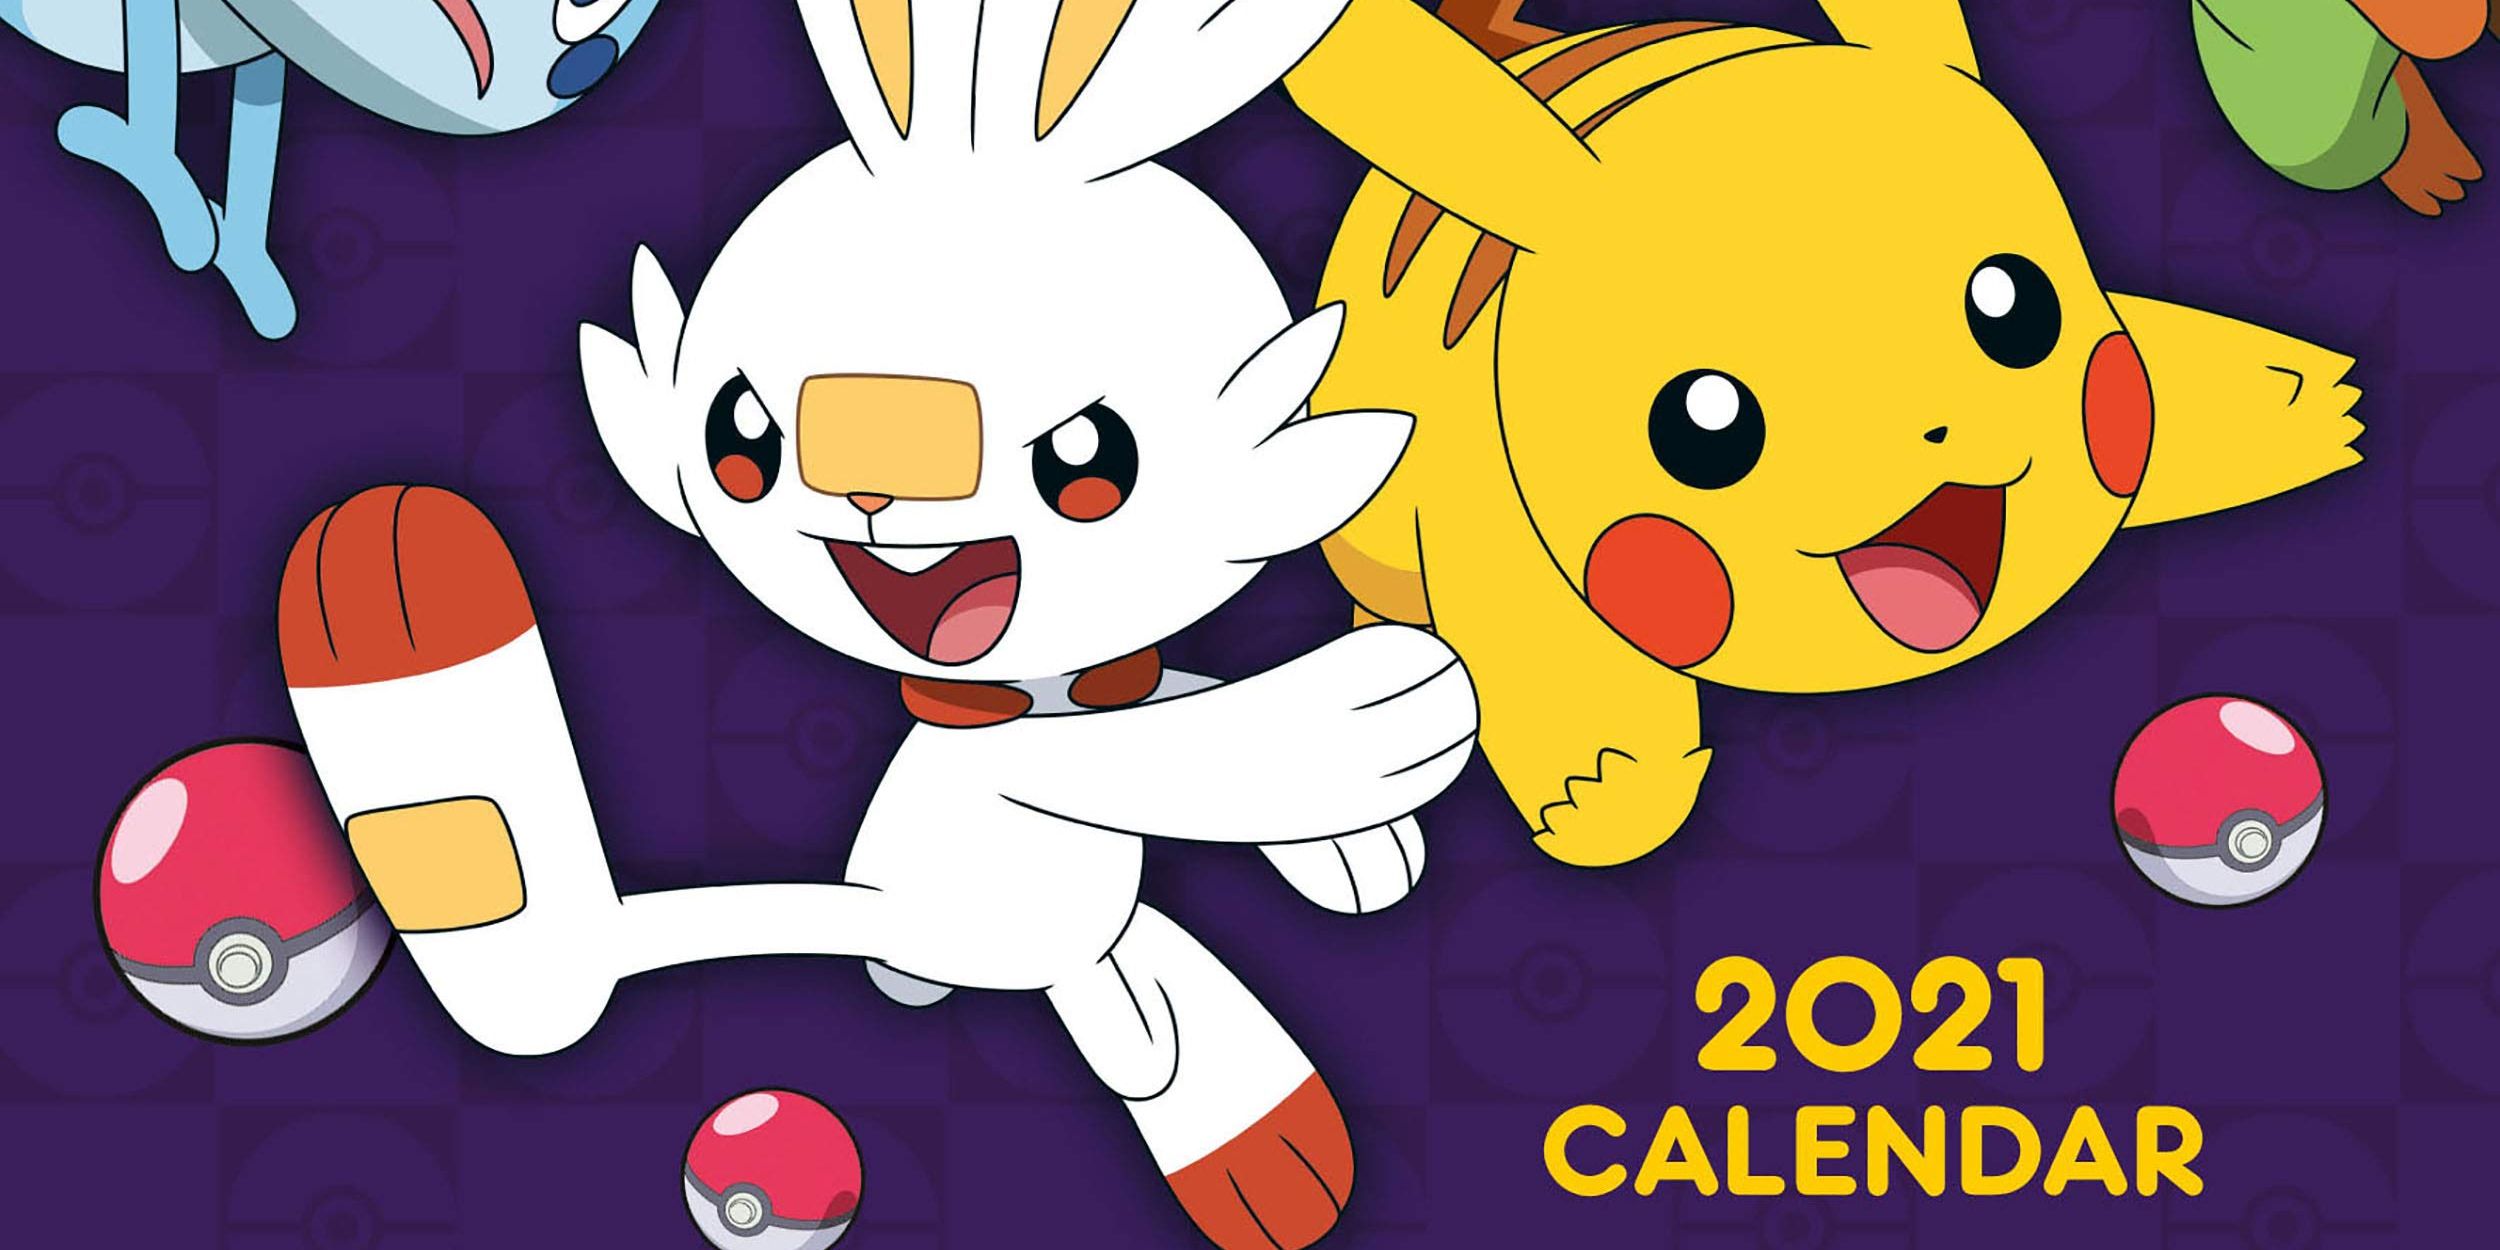 An image of a Pokemon calendar for 2021